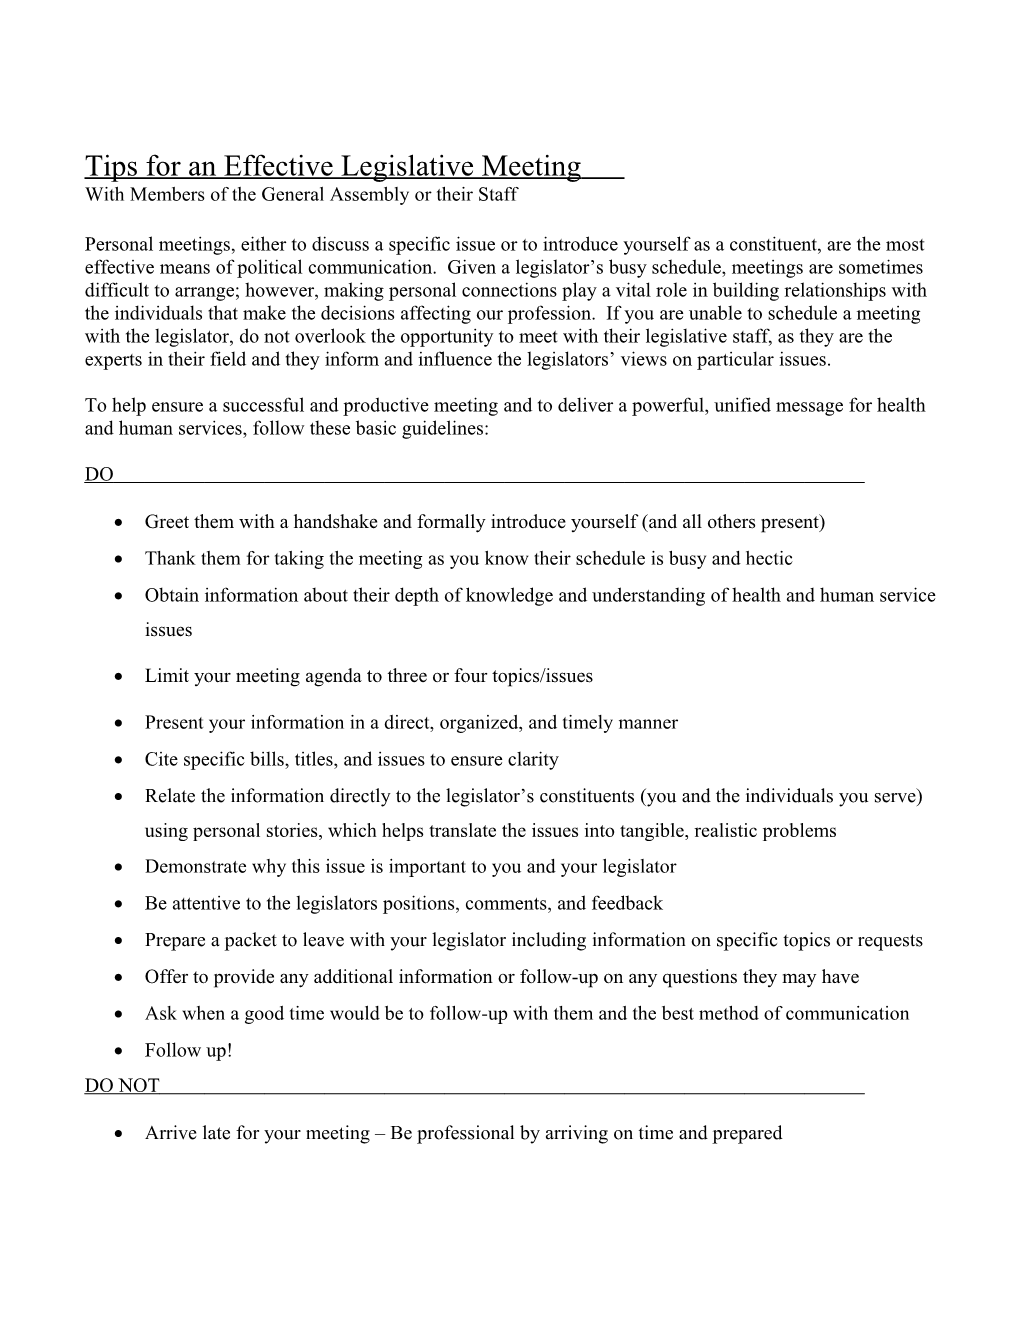 Tips for an Effective Legislative Meeting